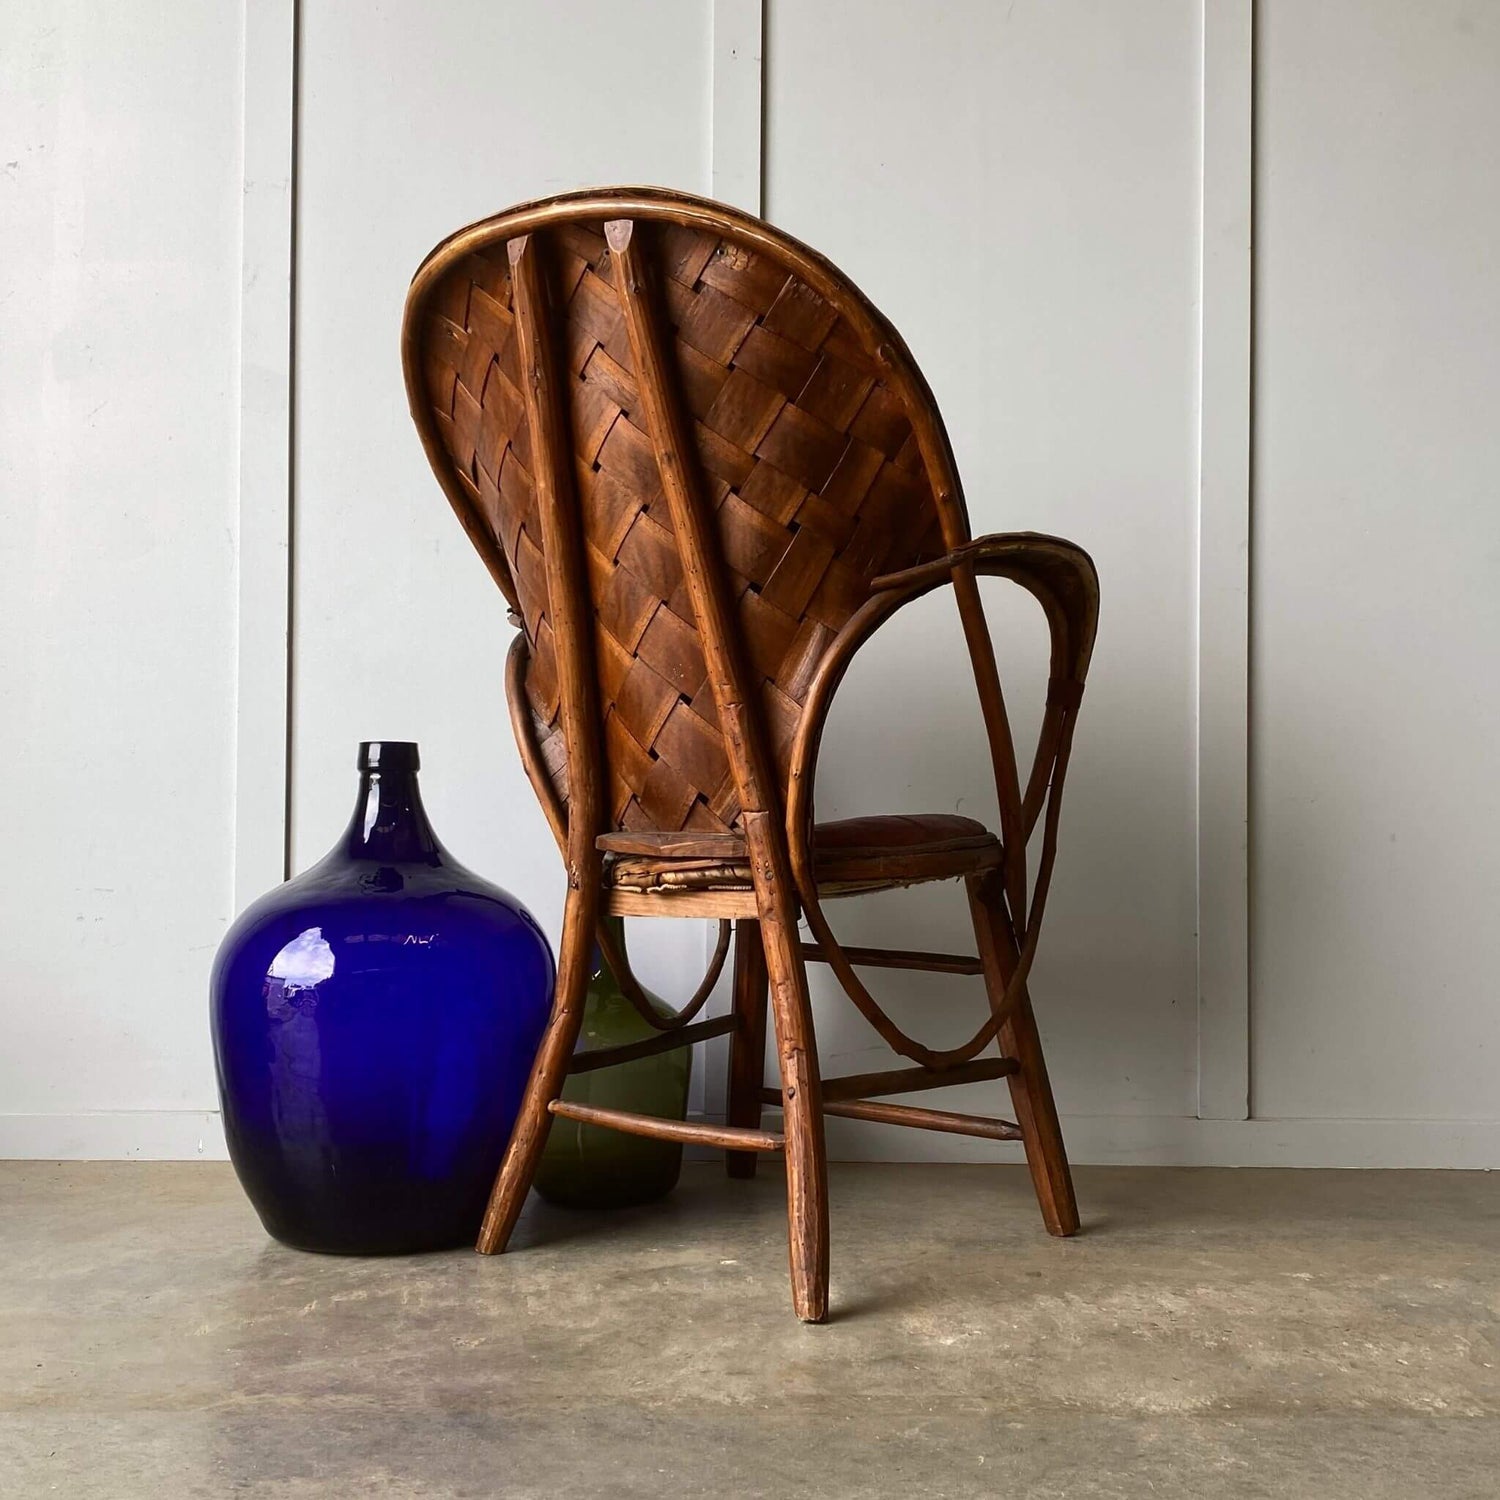 Bent wood arm chair